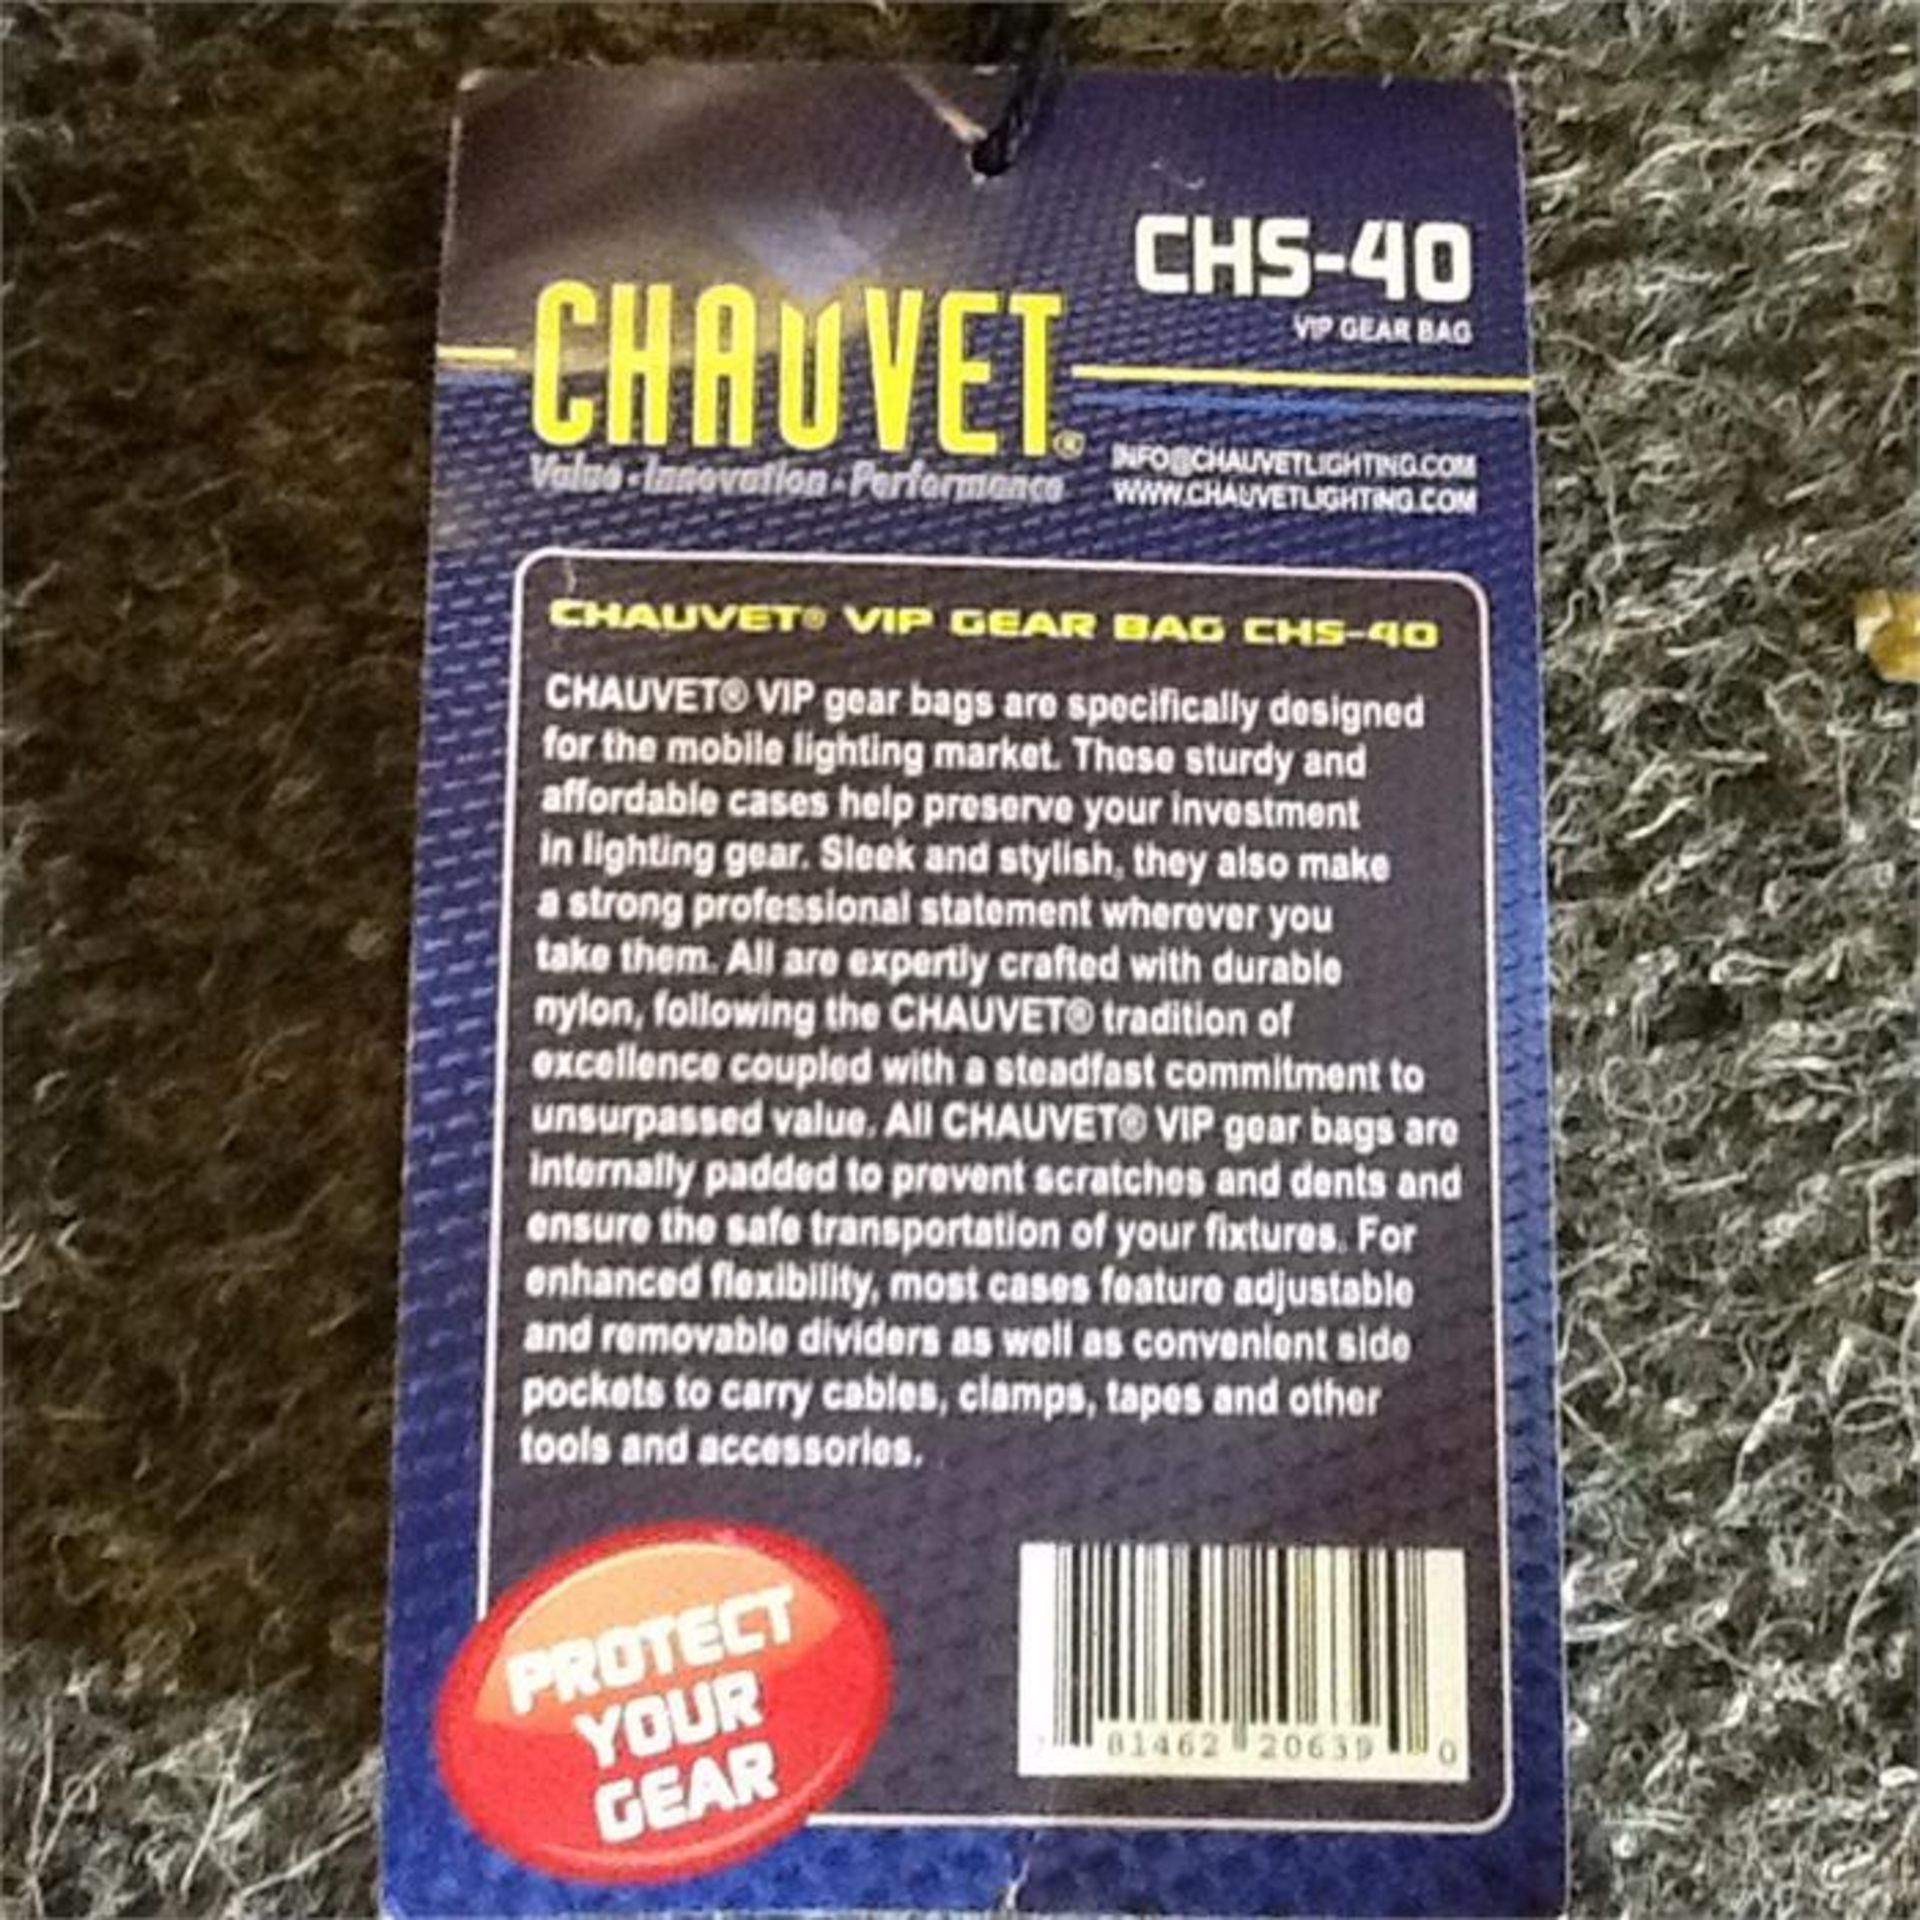 Chauvet  CHS-40 vip gear bag - Image 2 of 10